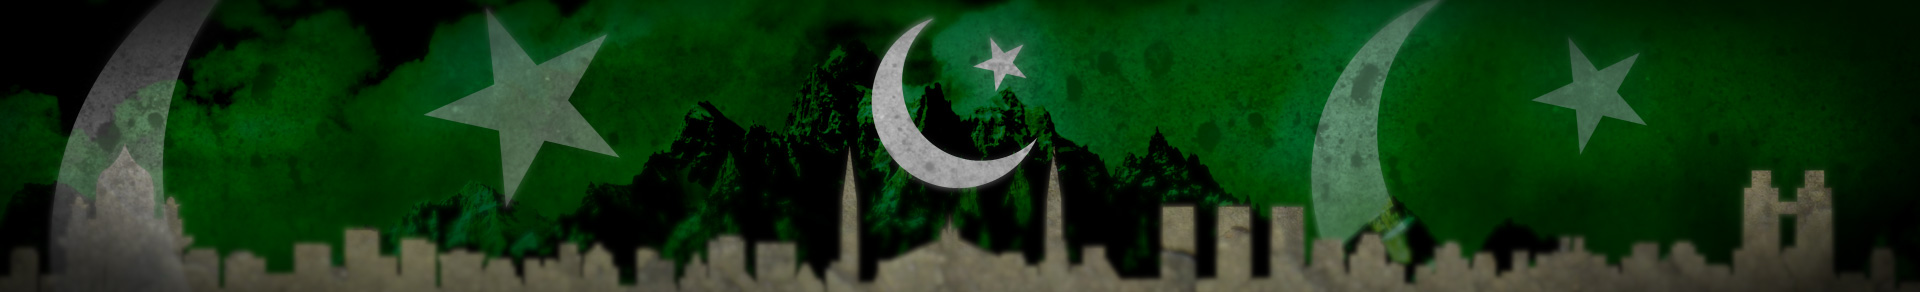 Pakistan_Digital.jpg